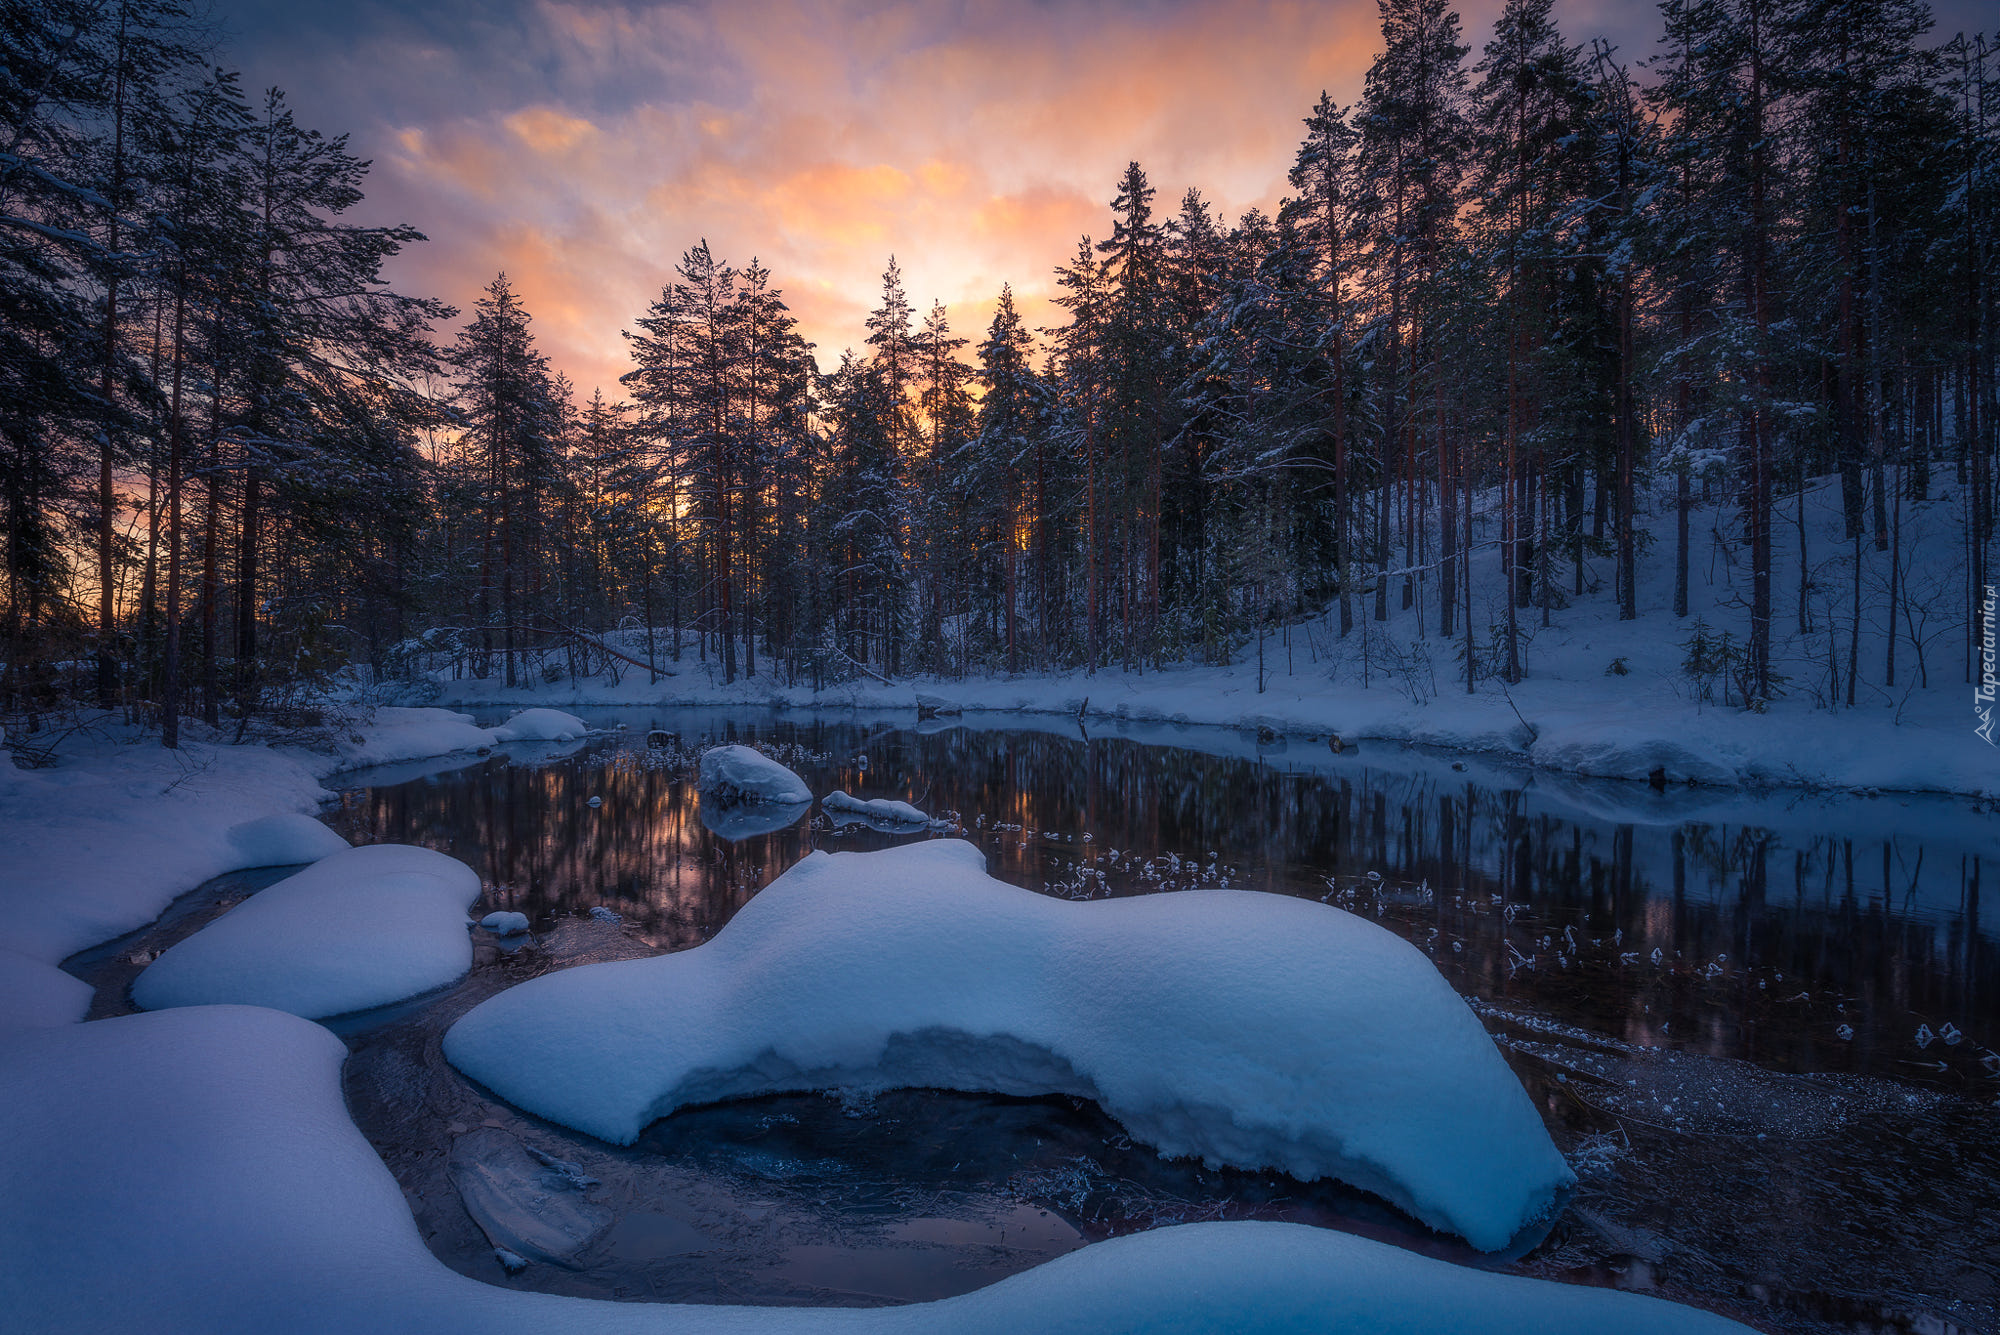 Norwegia, Gmina Ringerike, Drzewa, Zima, Śnieg, Jezioro